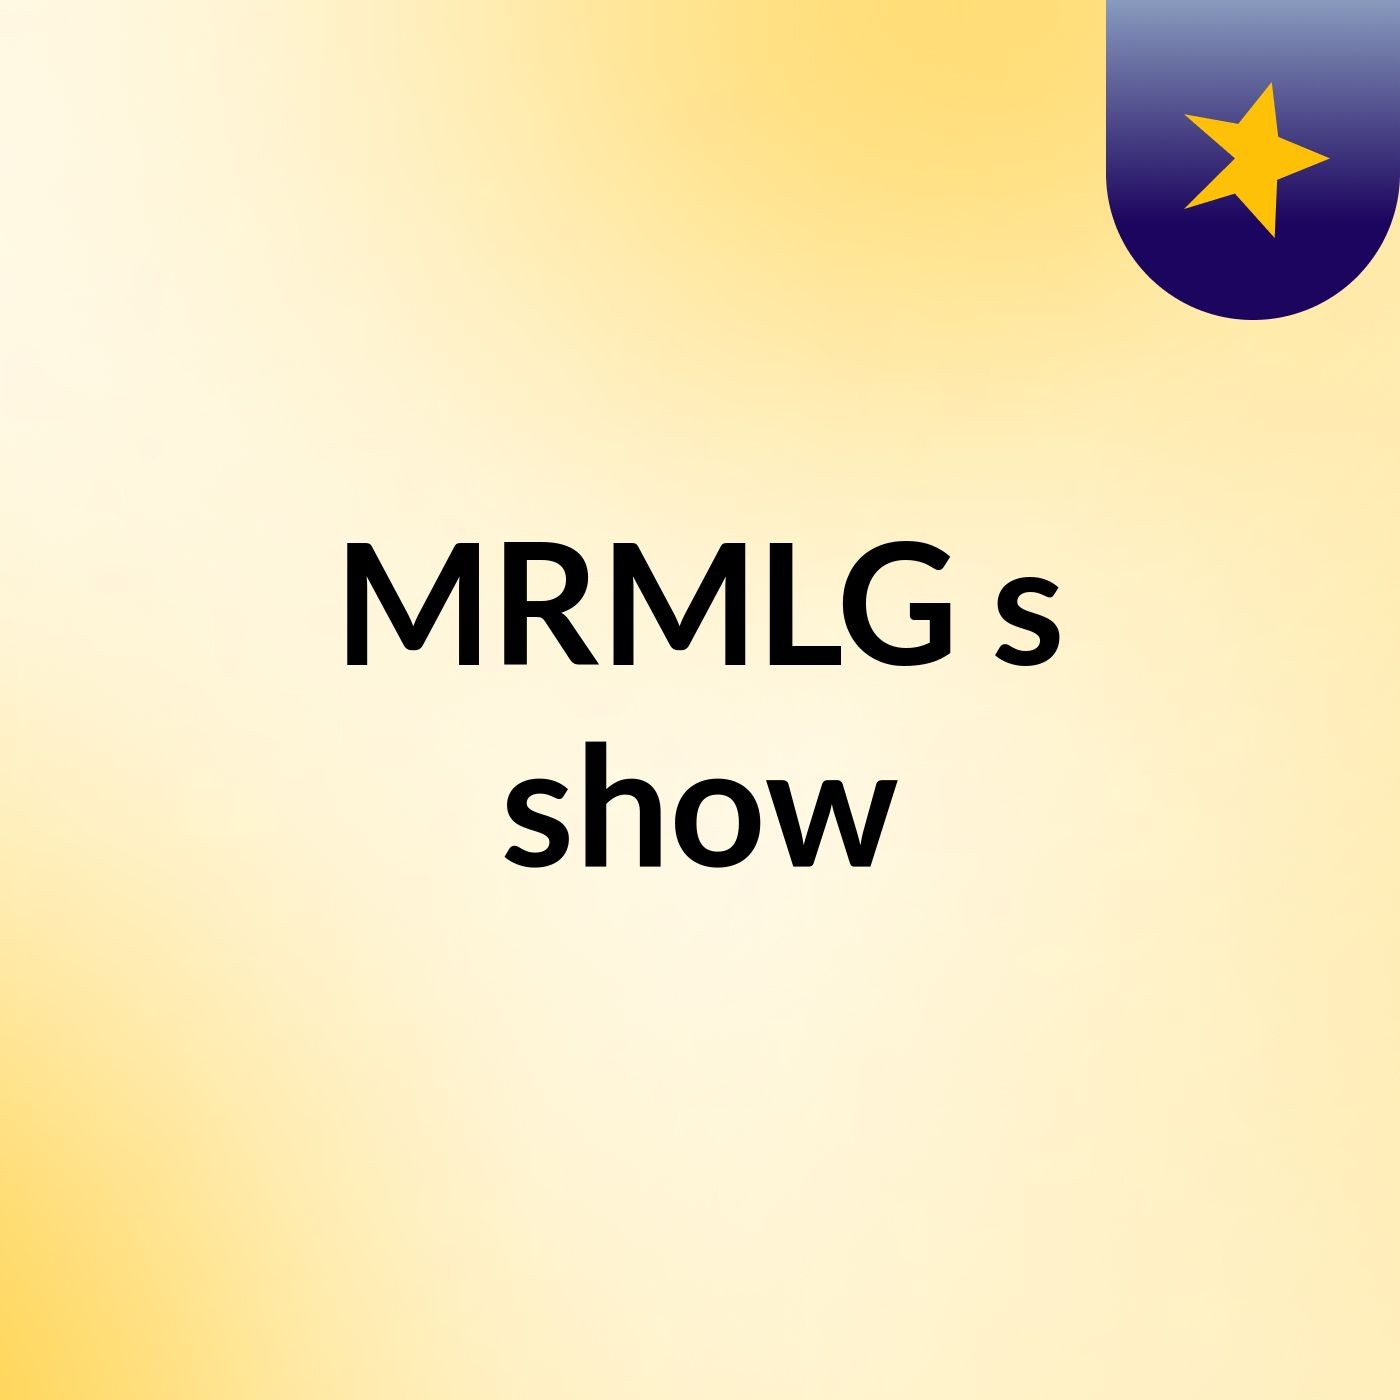 MRMLG's show